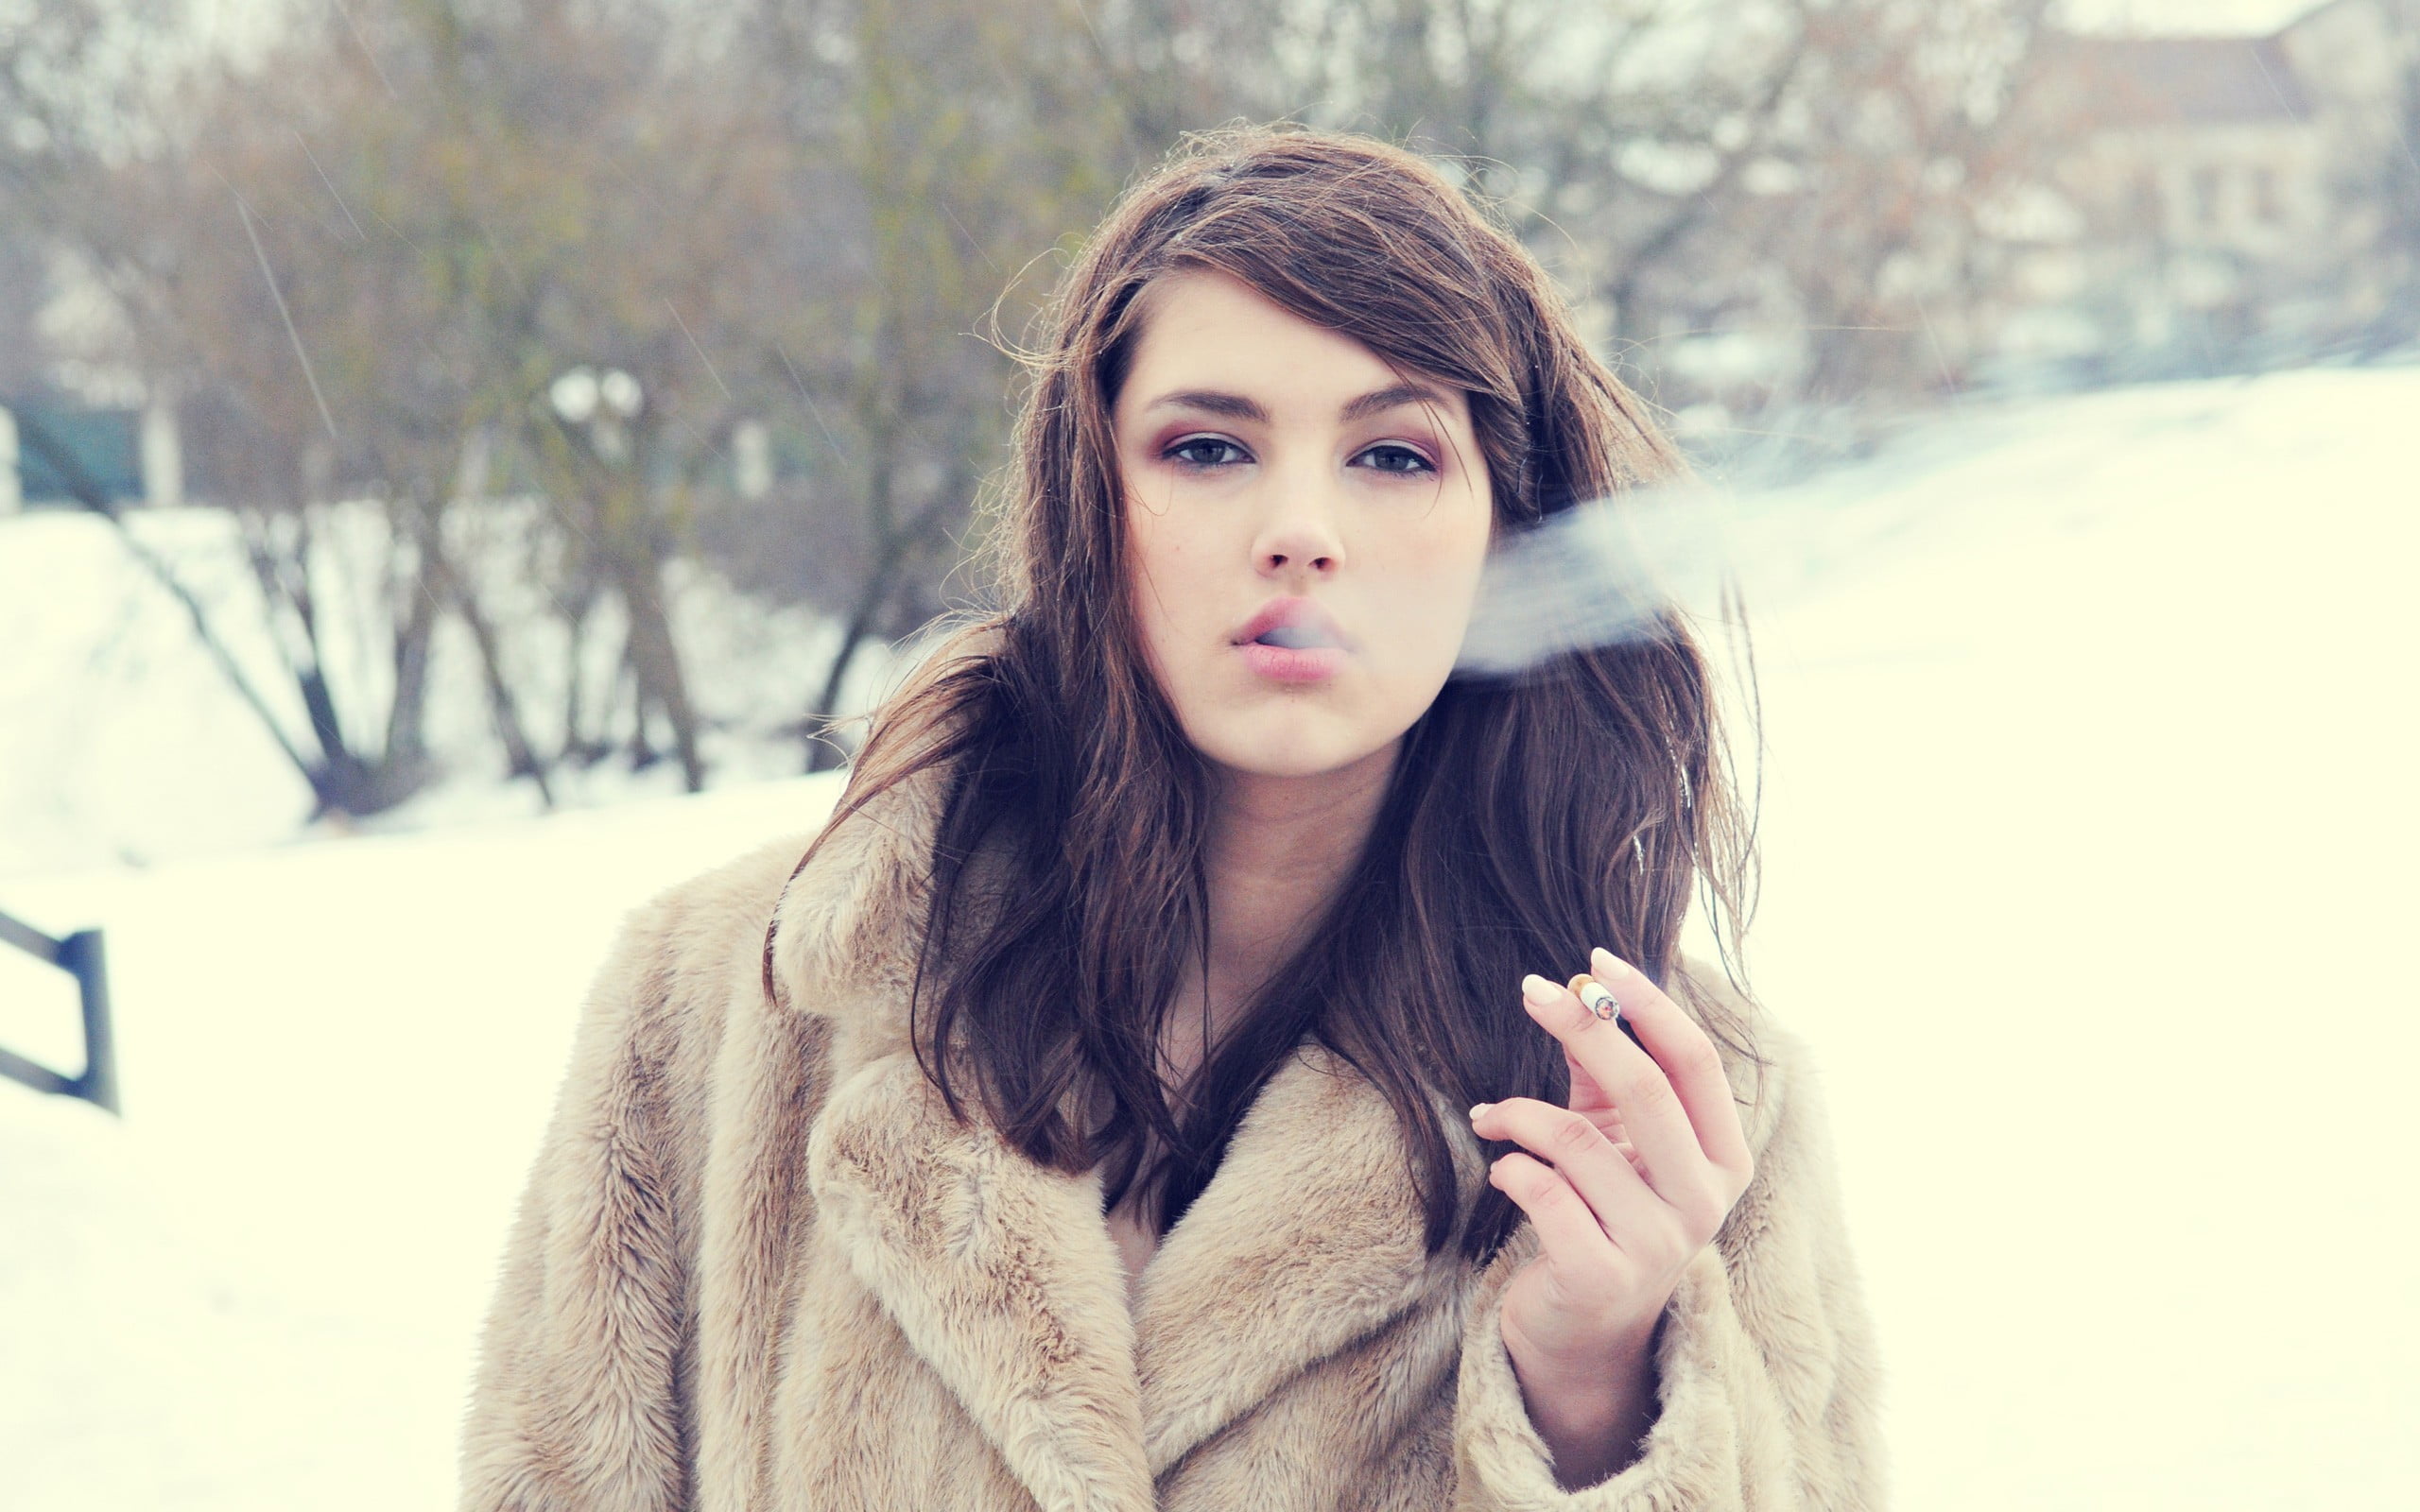 women, winter, smoking, fur coats, Caucasian, dark eyes, young adult